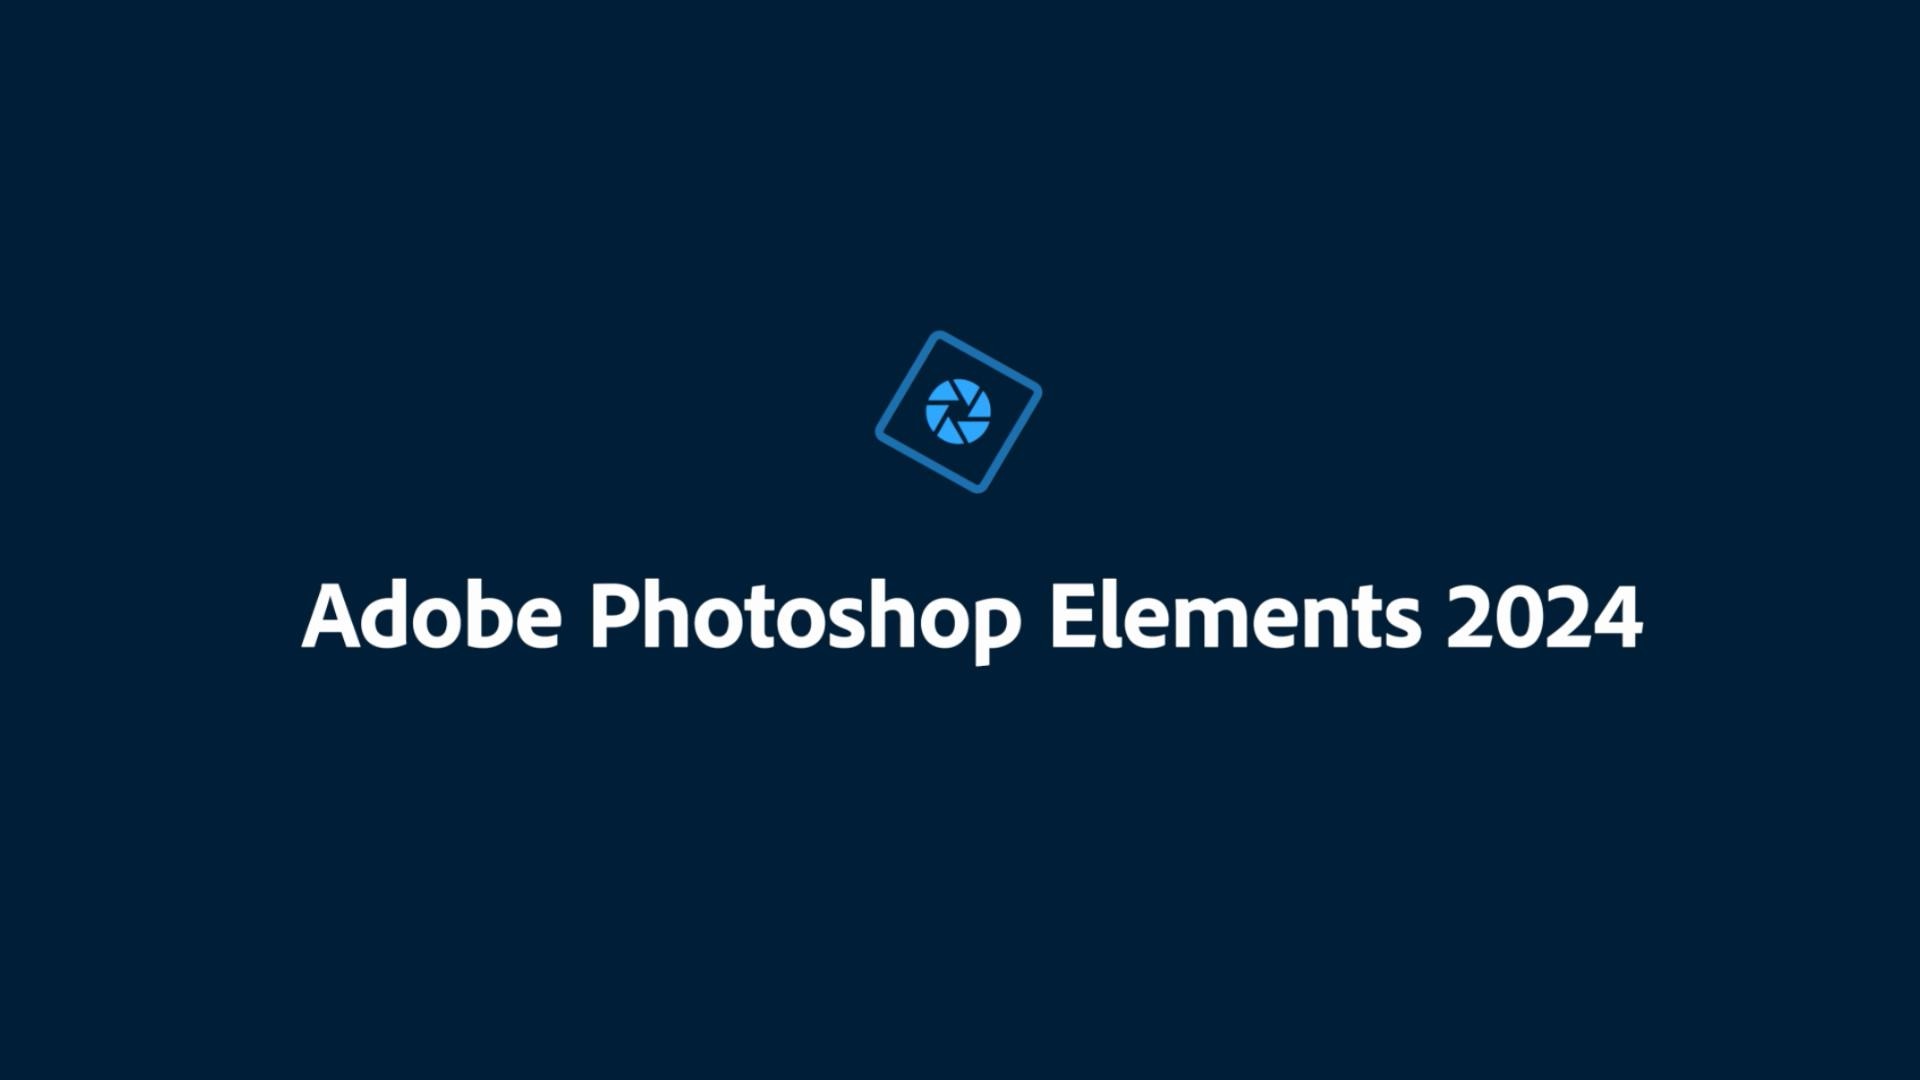 Adobe photoshop elements 2024